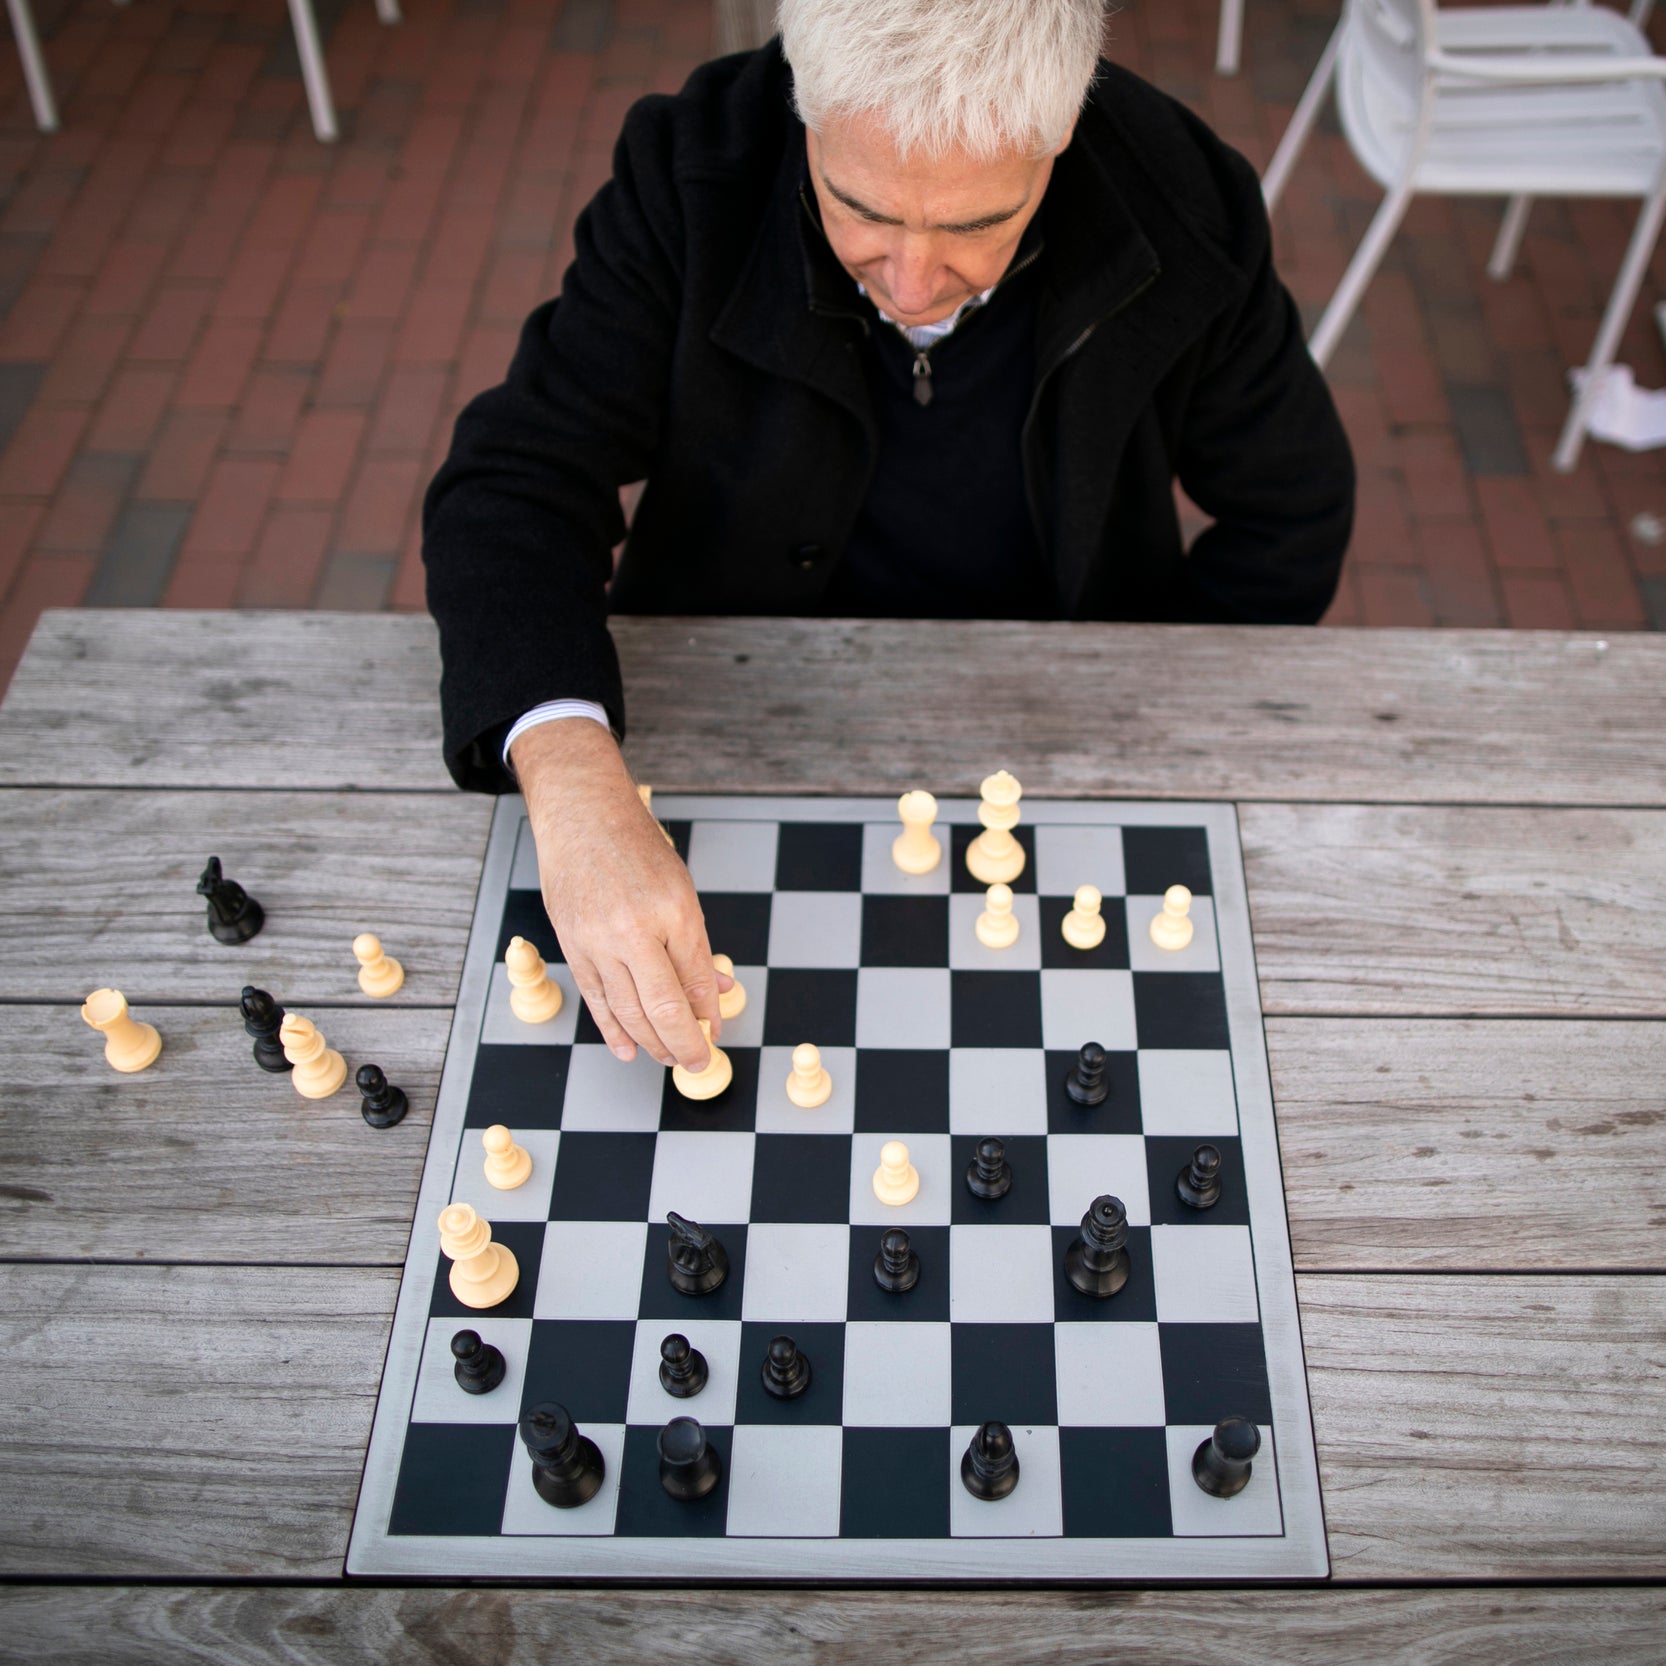 A man plays chess